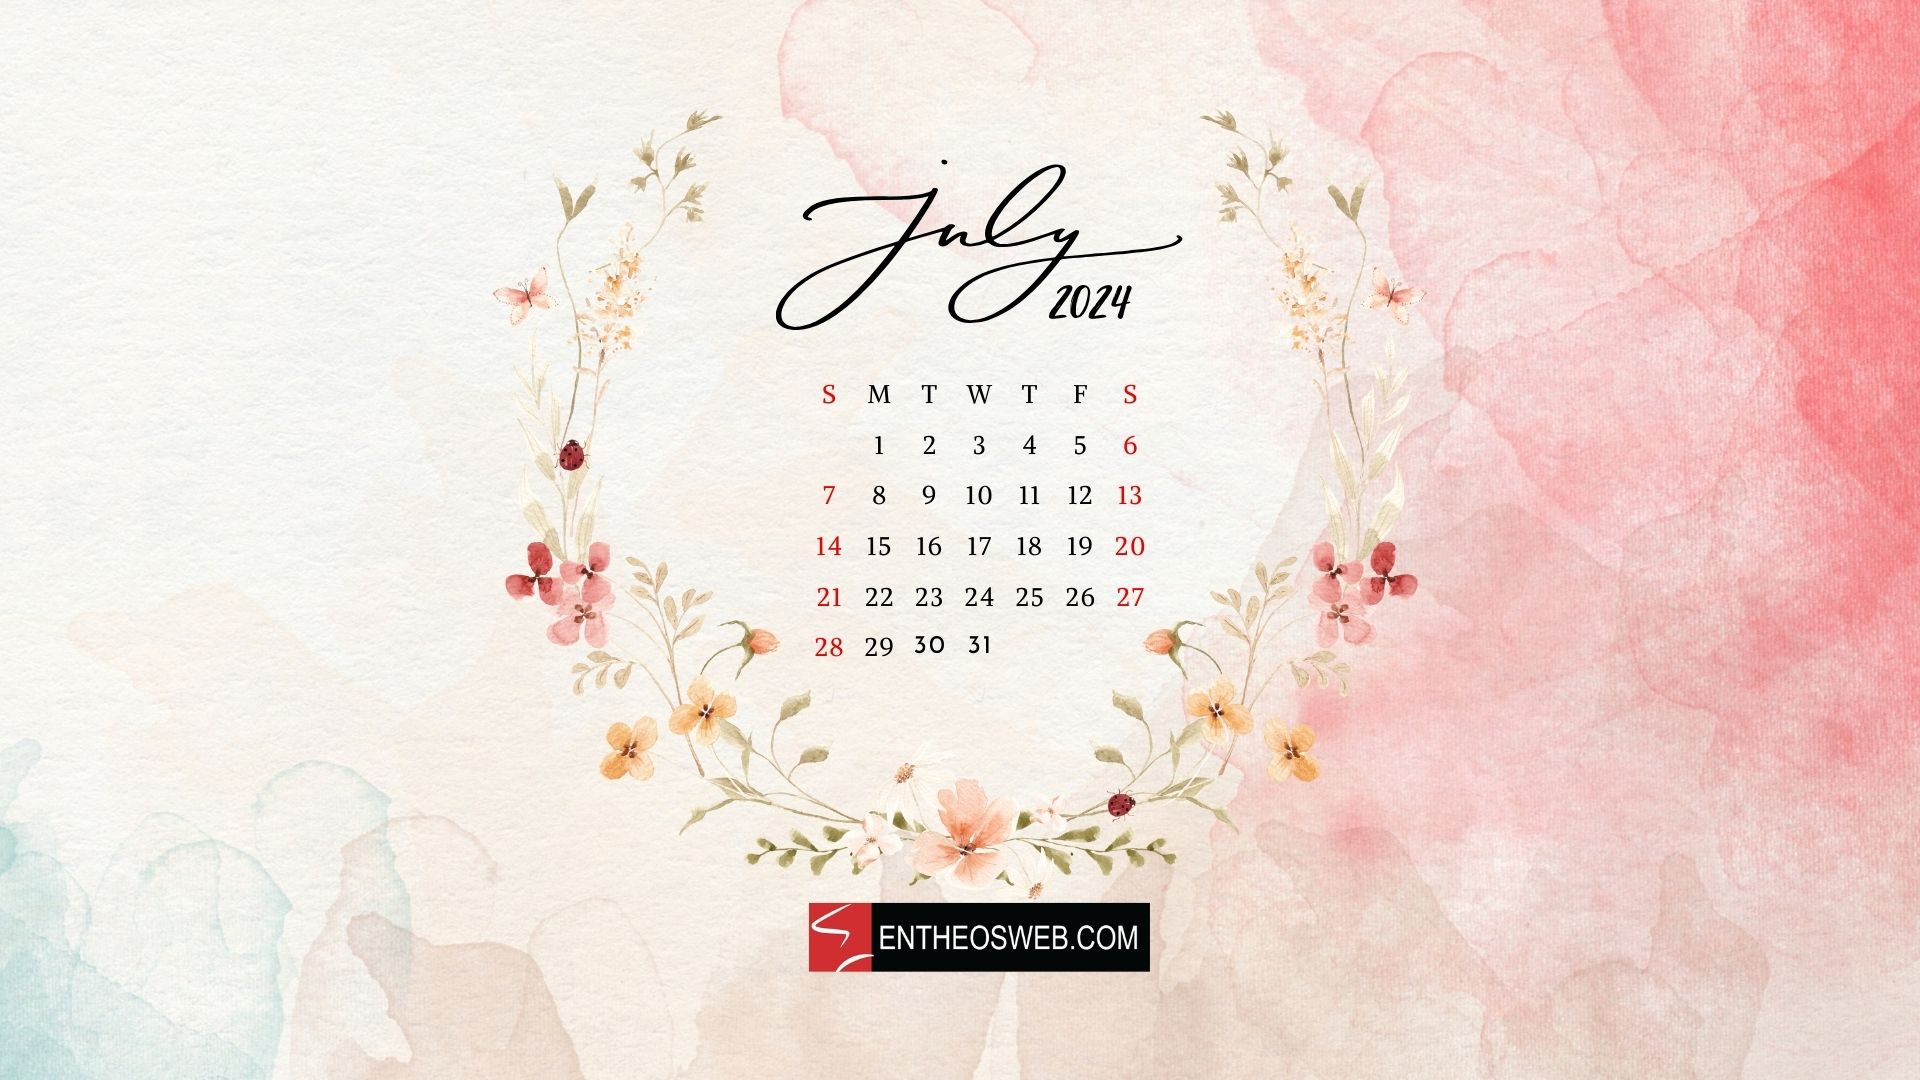 July 2024 Desktop Wallpaper Calendar | Entheosweb regarding July 2024 Calendar Wallpaper Desktop